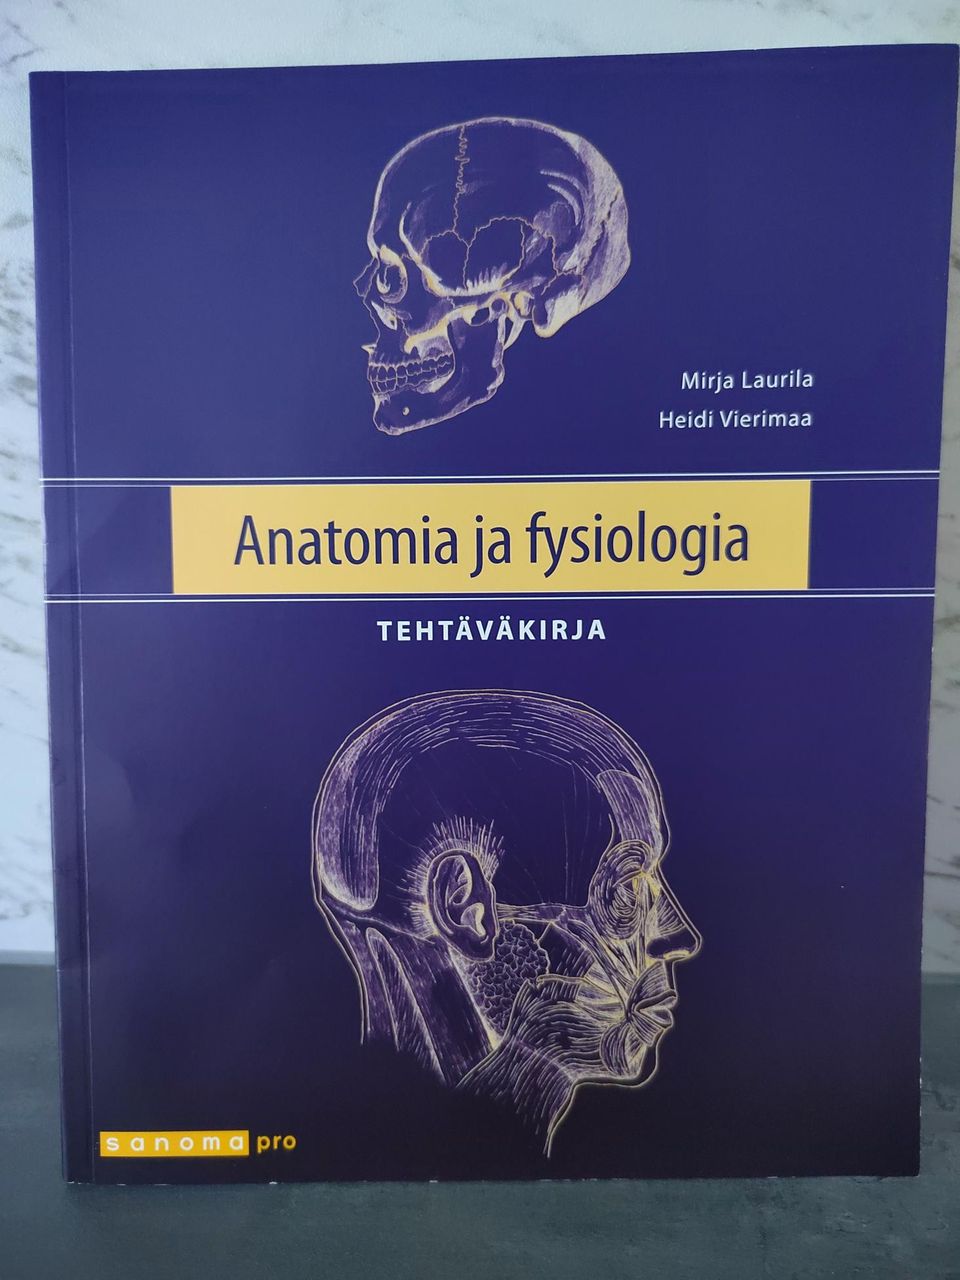 Anatomia ja fysiologia, Tehtäväkirja /Laurila, Vierimaa